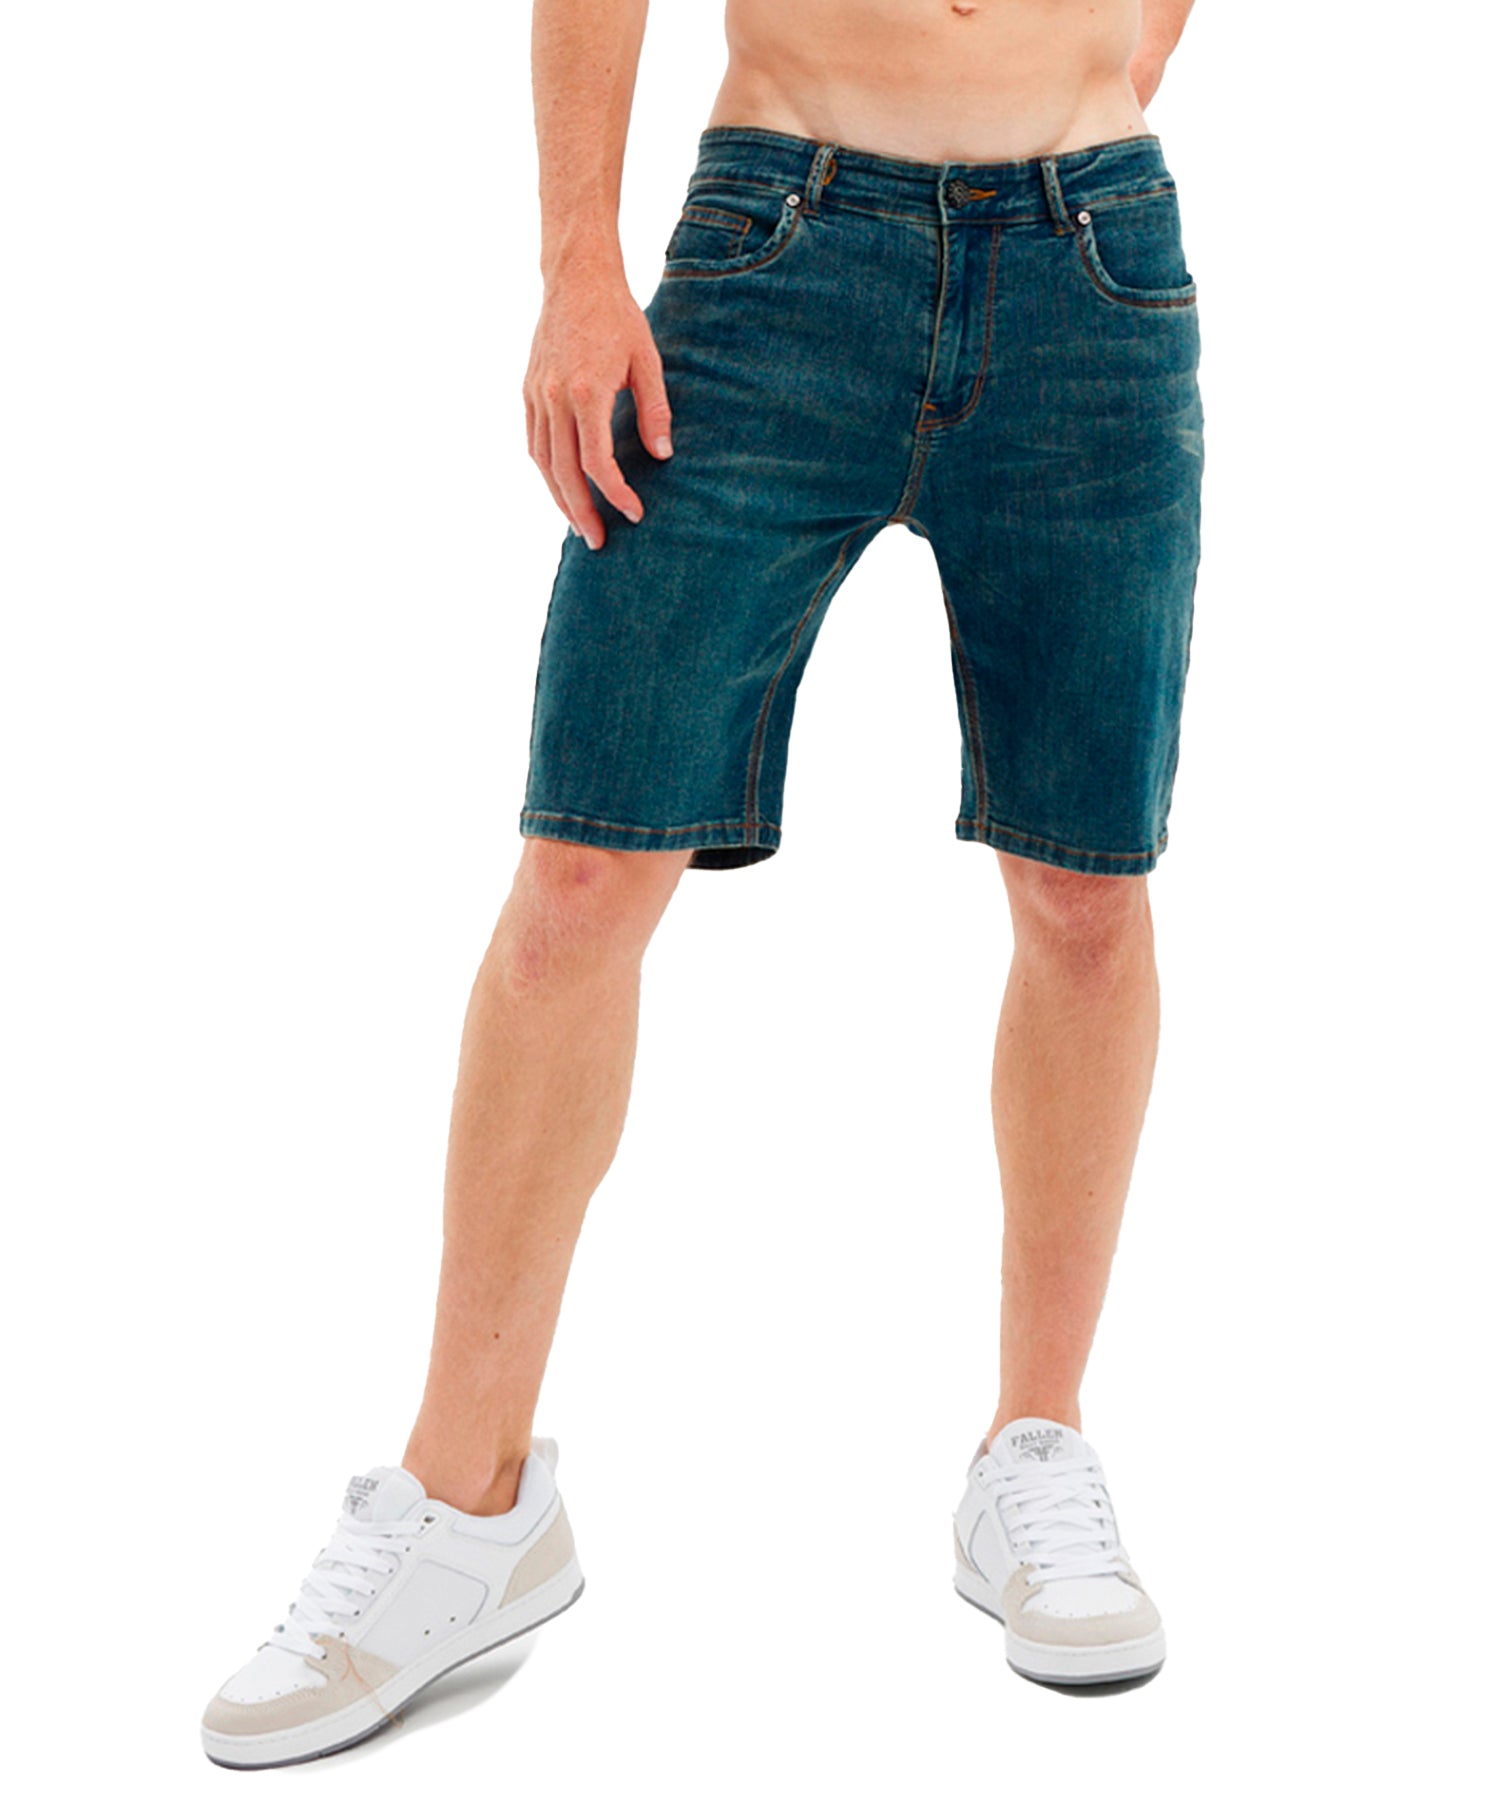 hydroponic-pantalon-corto-century-denim-dark-used-denim-color-azul-forma-de-tejano-elastico.